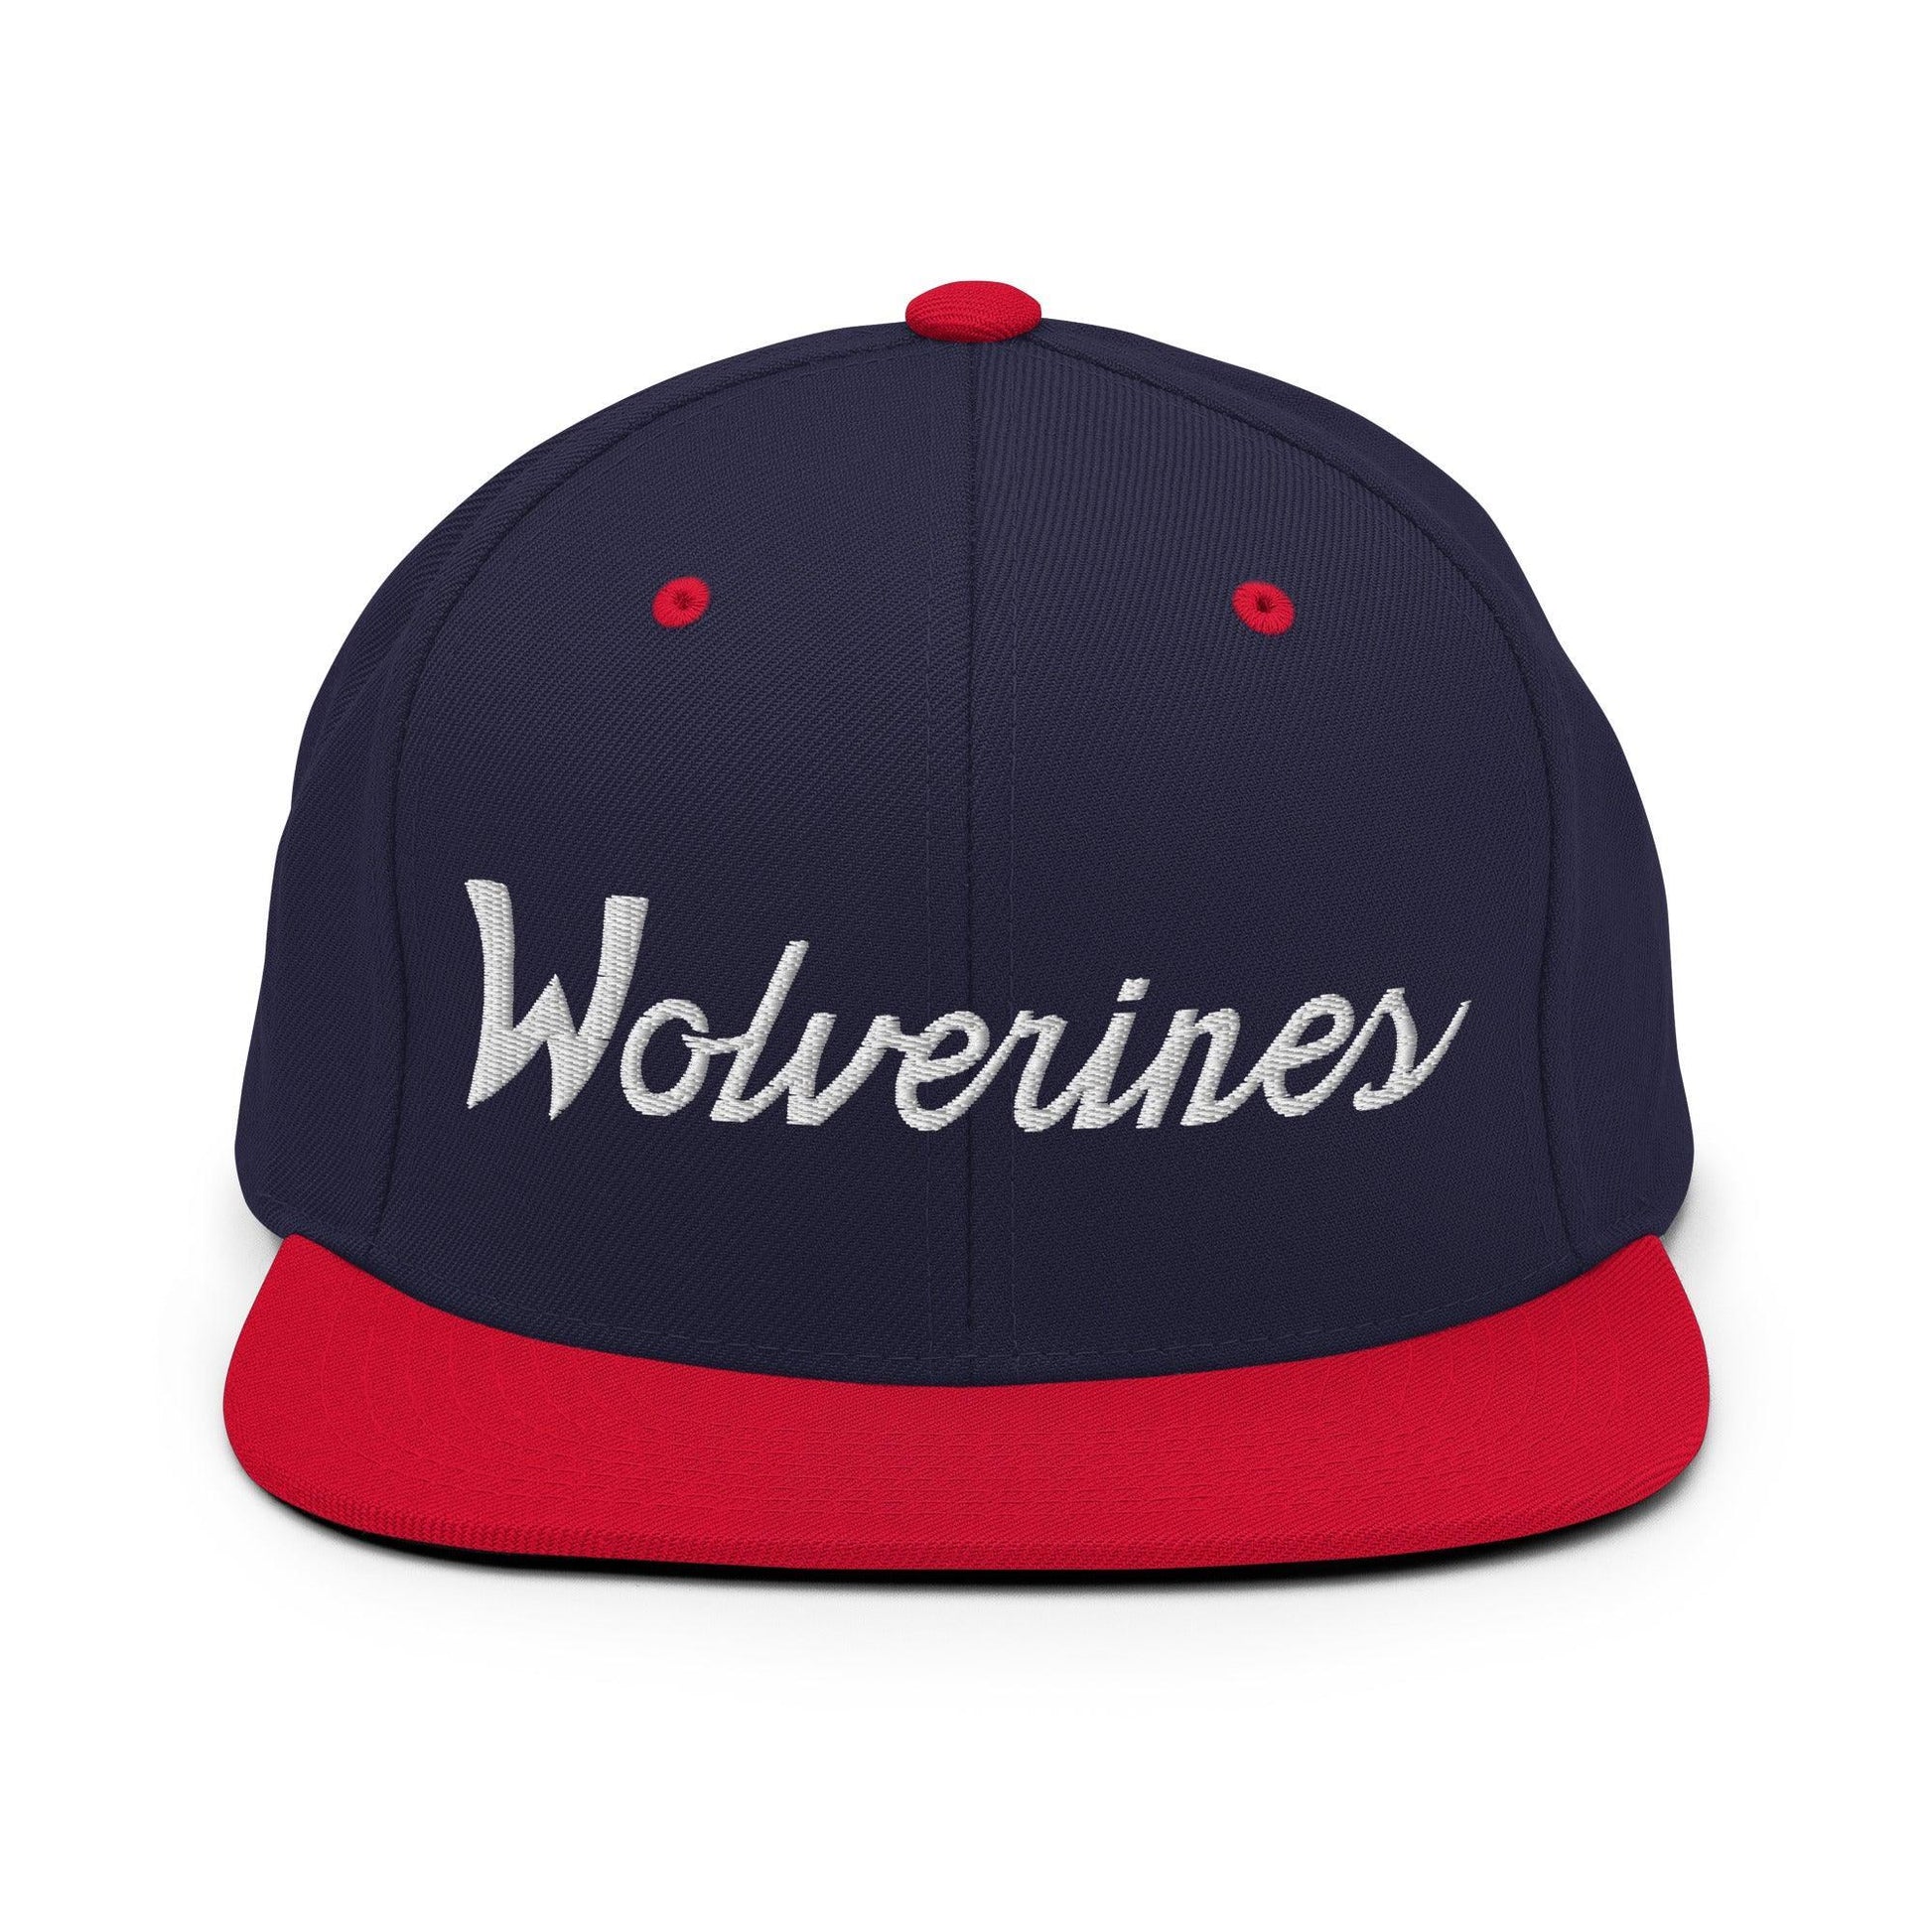 Wolverines School Mascot Script Snapback Hat Navy/ Red